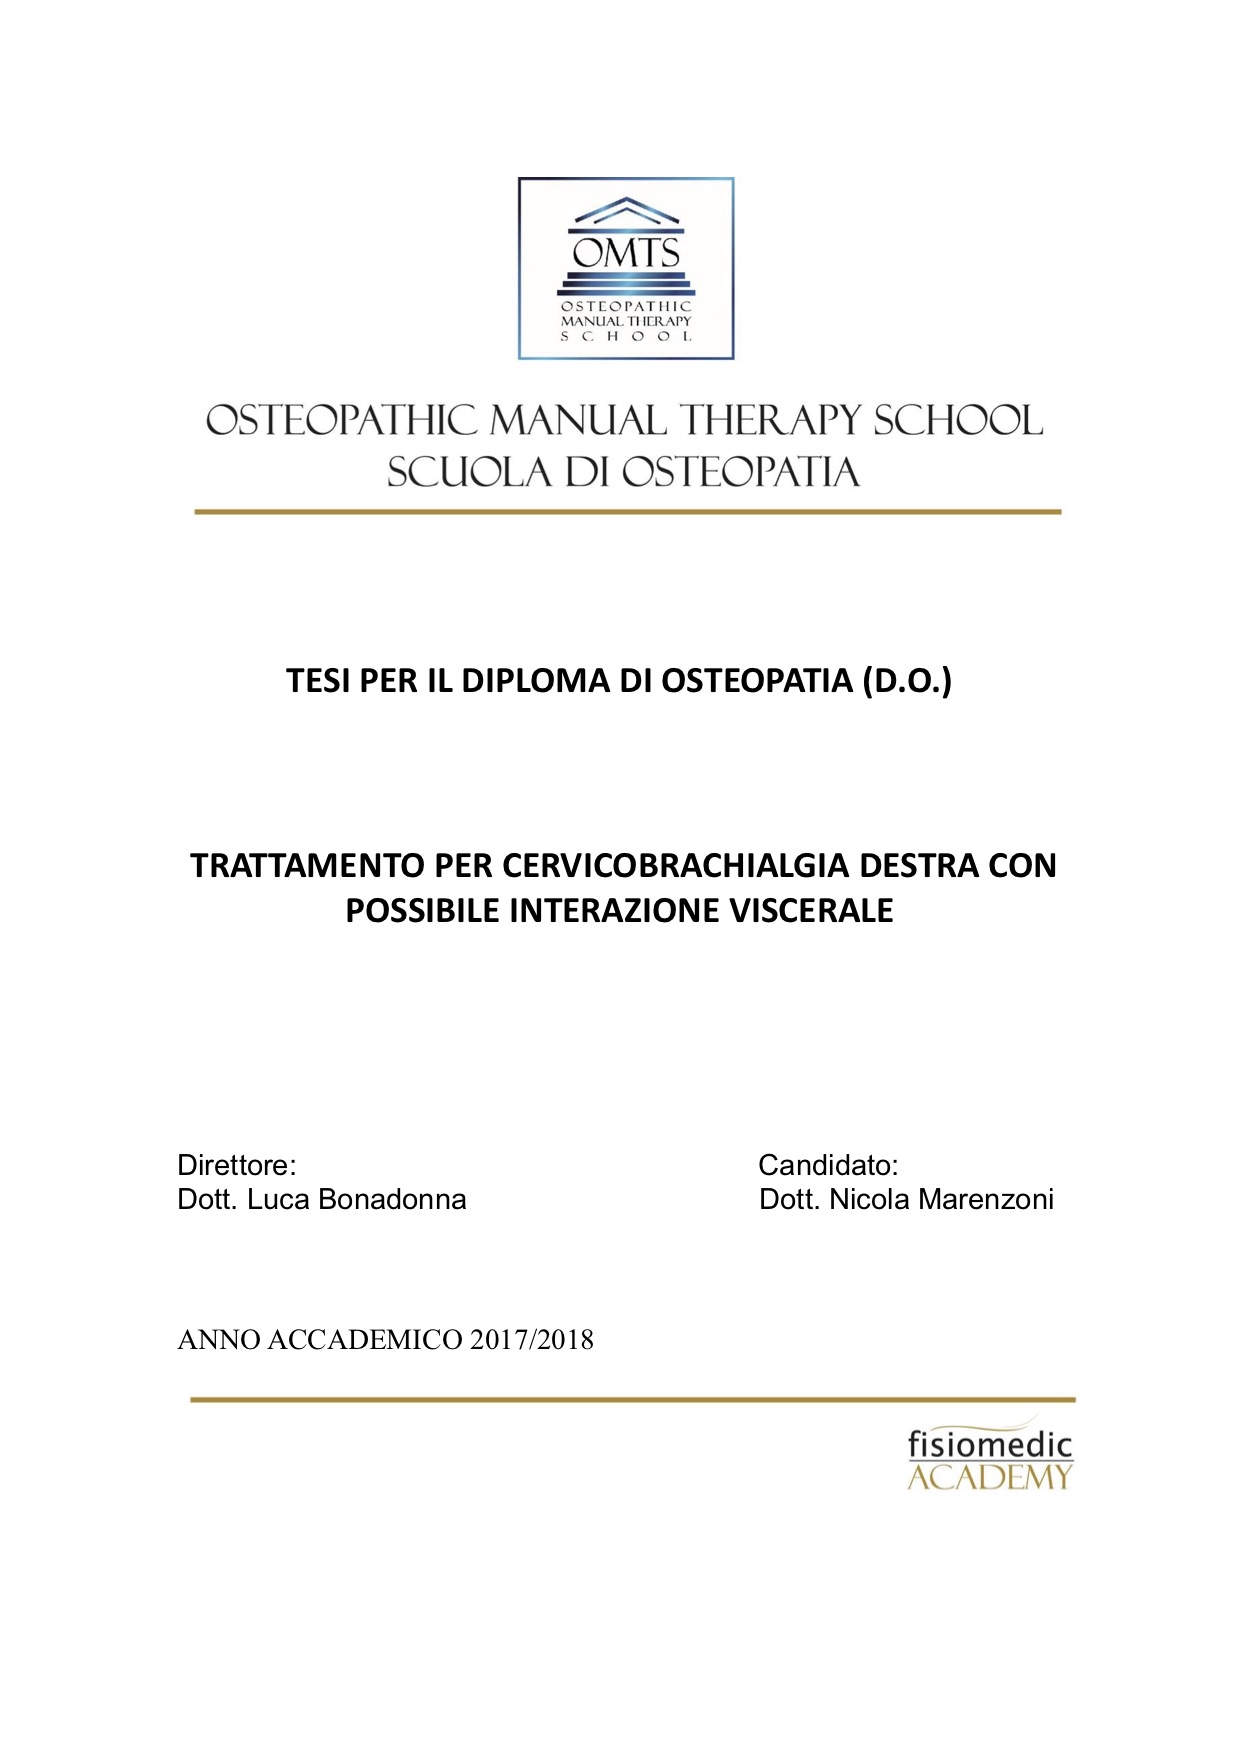 Nicola Marenzoni Tesi Diploma Osteopatia 2018